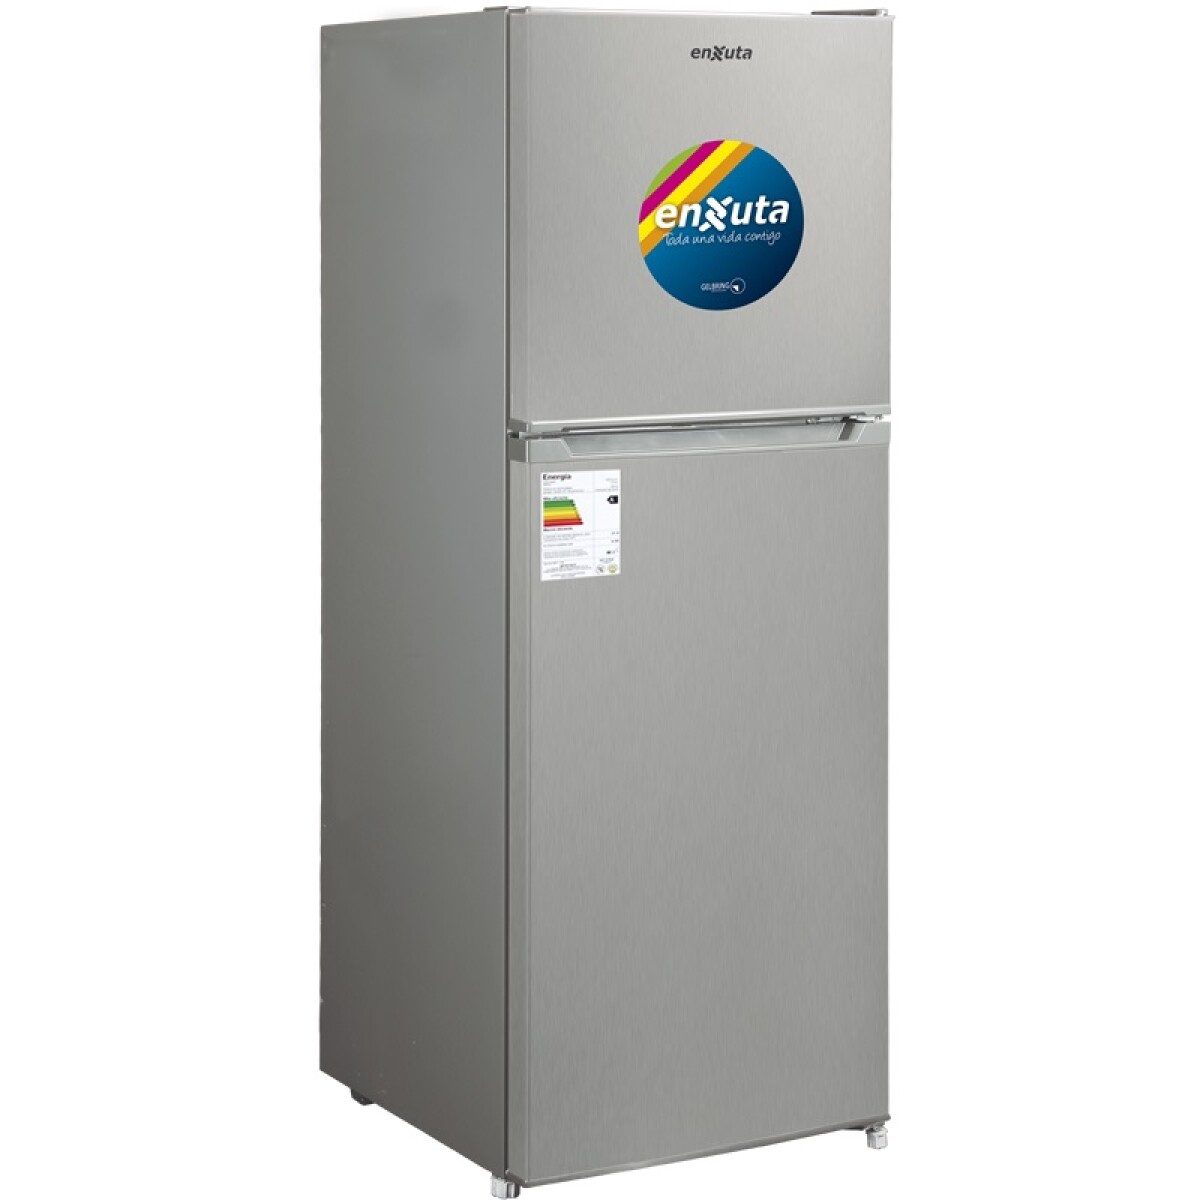 Refrigerador Enxuta Fs 200 Litros Inox Renx215nfi-1 